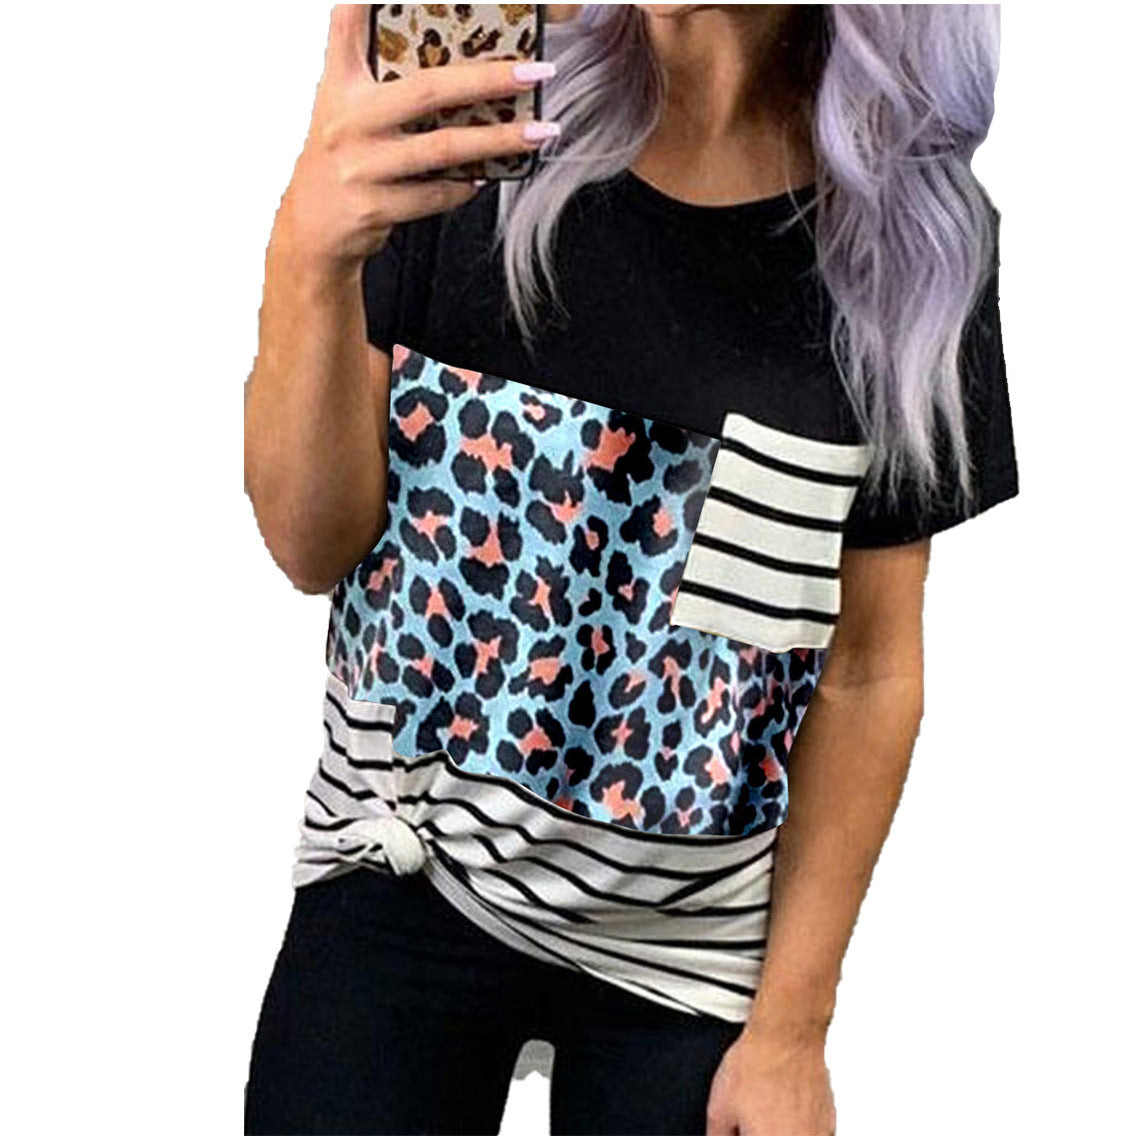 Women's New Short Sleeve T-Shirt Summer Round Neck Pullover Leopard Print Stitching Top